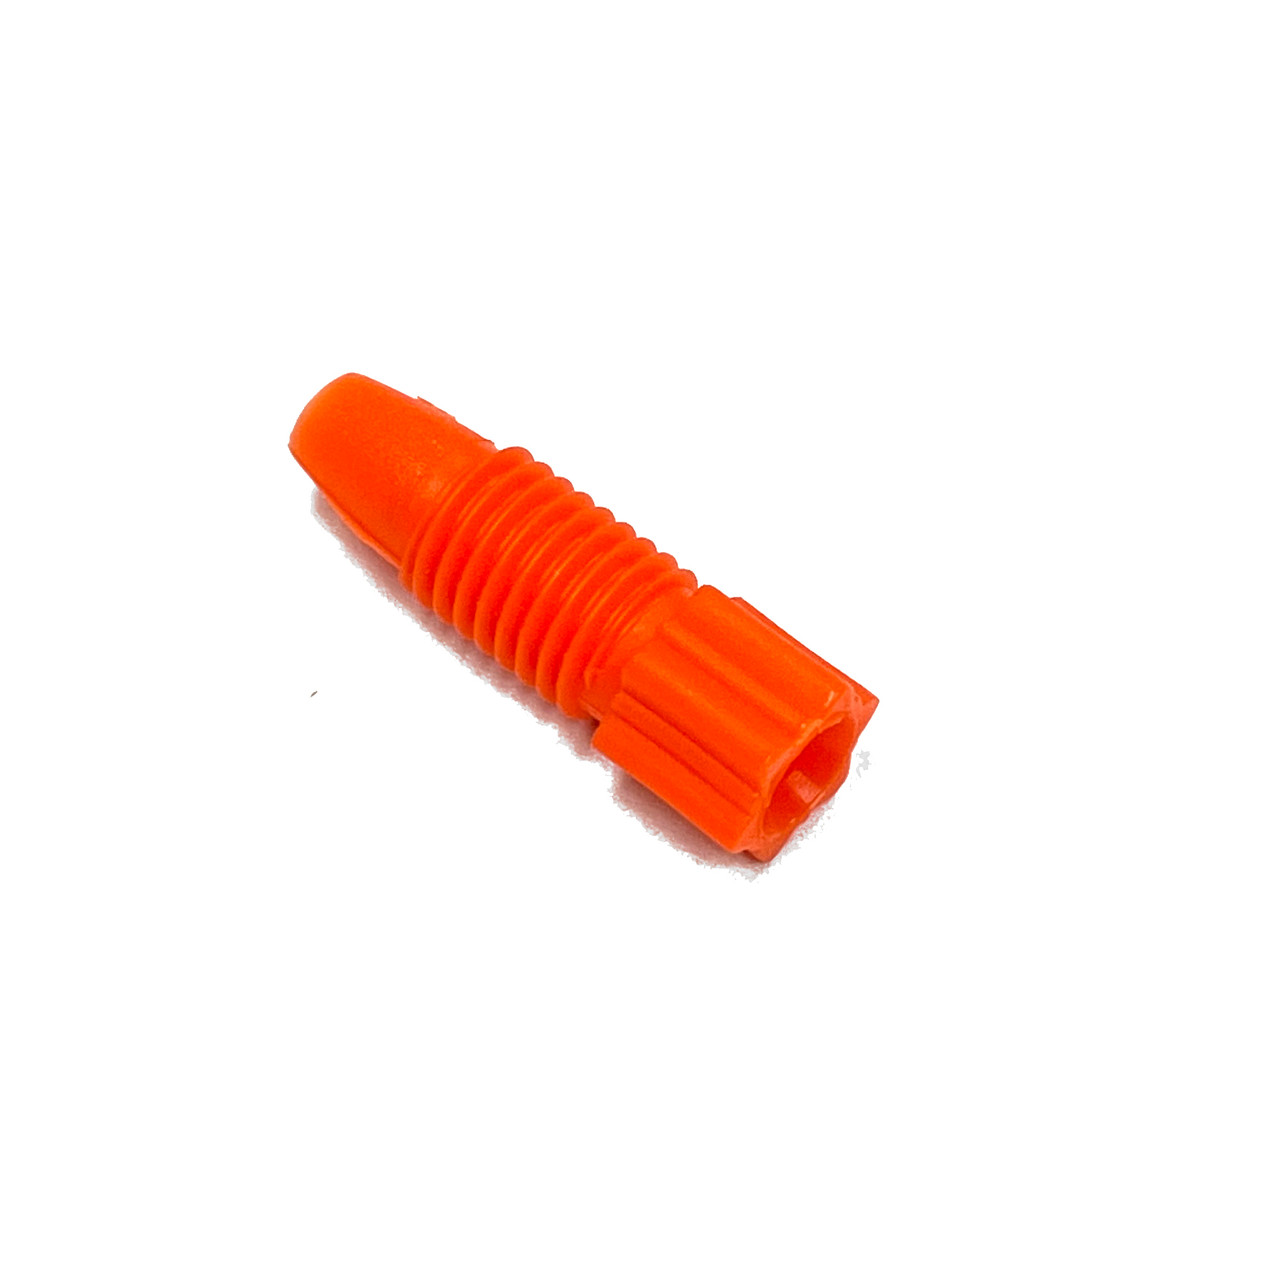 Pair Male Luer Lock Syringe Fitting Plug Cap PP Plastic Polypropylene:  : Industrial & Scientific